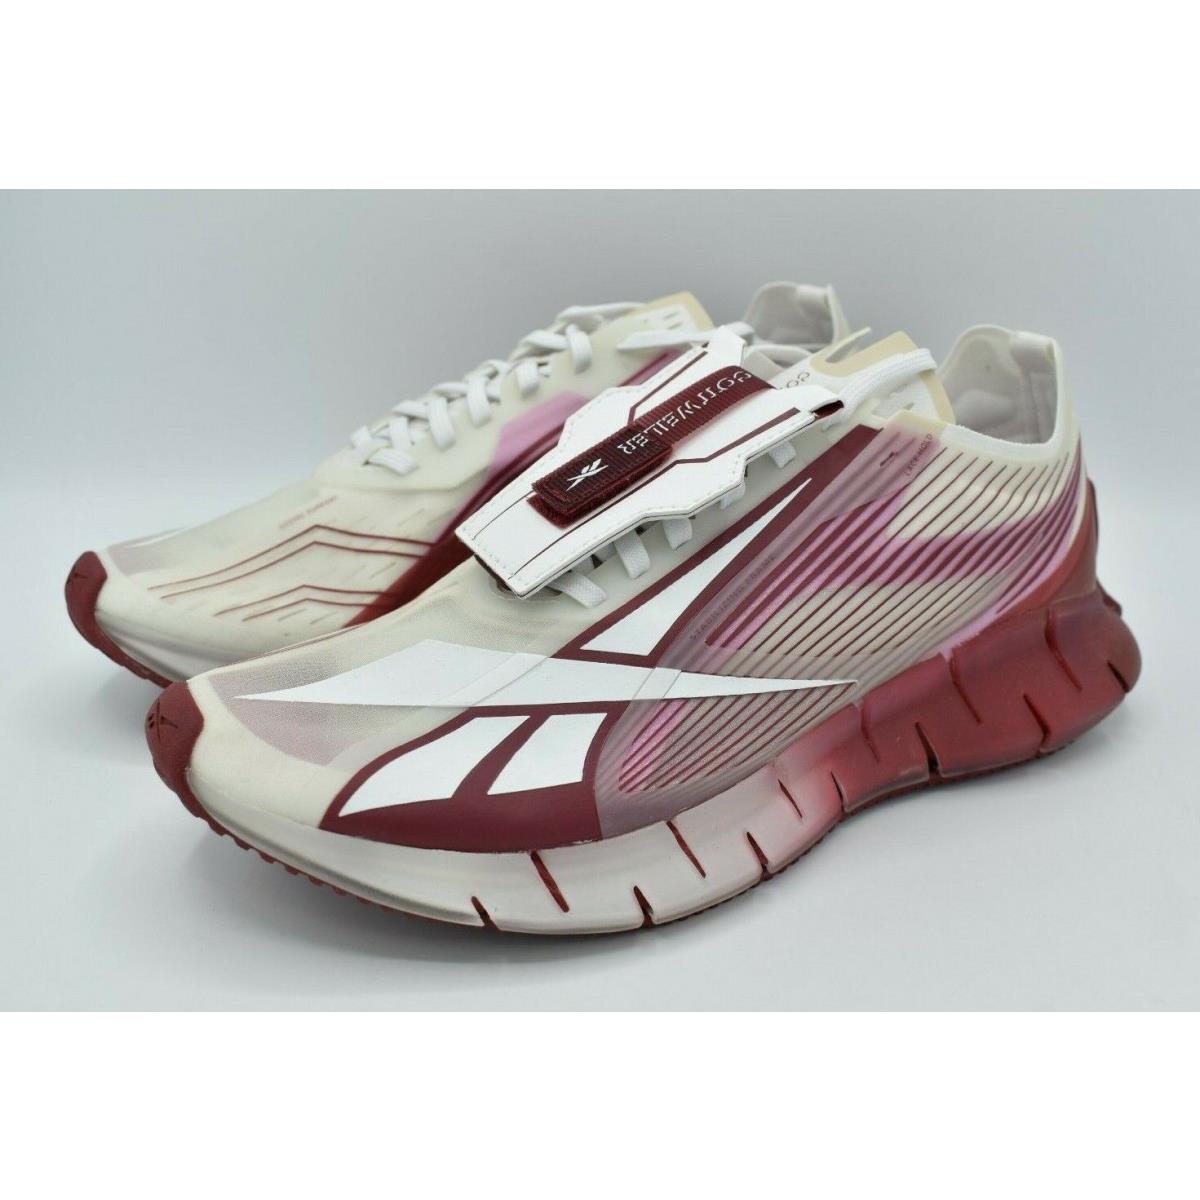 Reebok Men Size 8 Cottweiler Zig 3D Storm White Red Stucco Running Shoes Sneaker